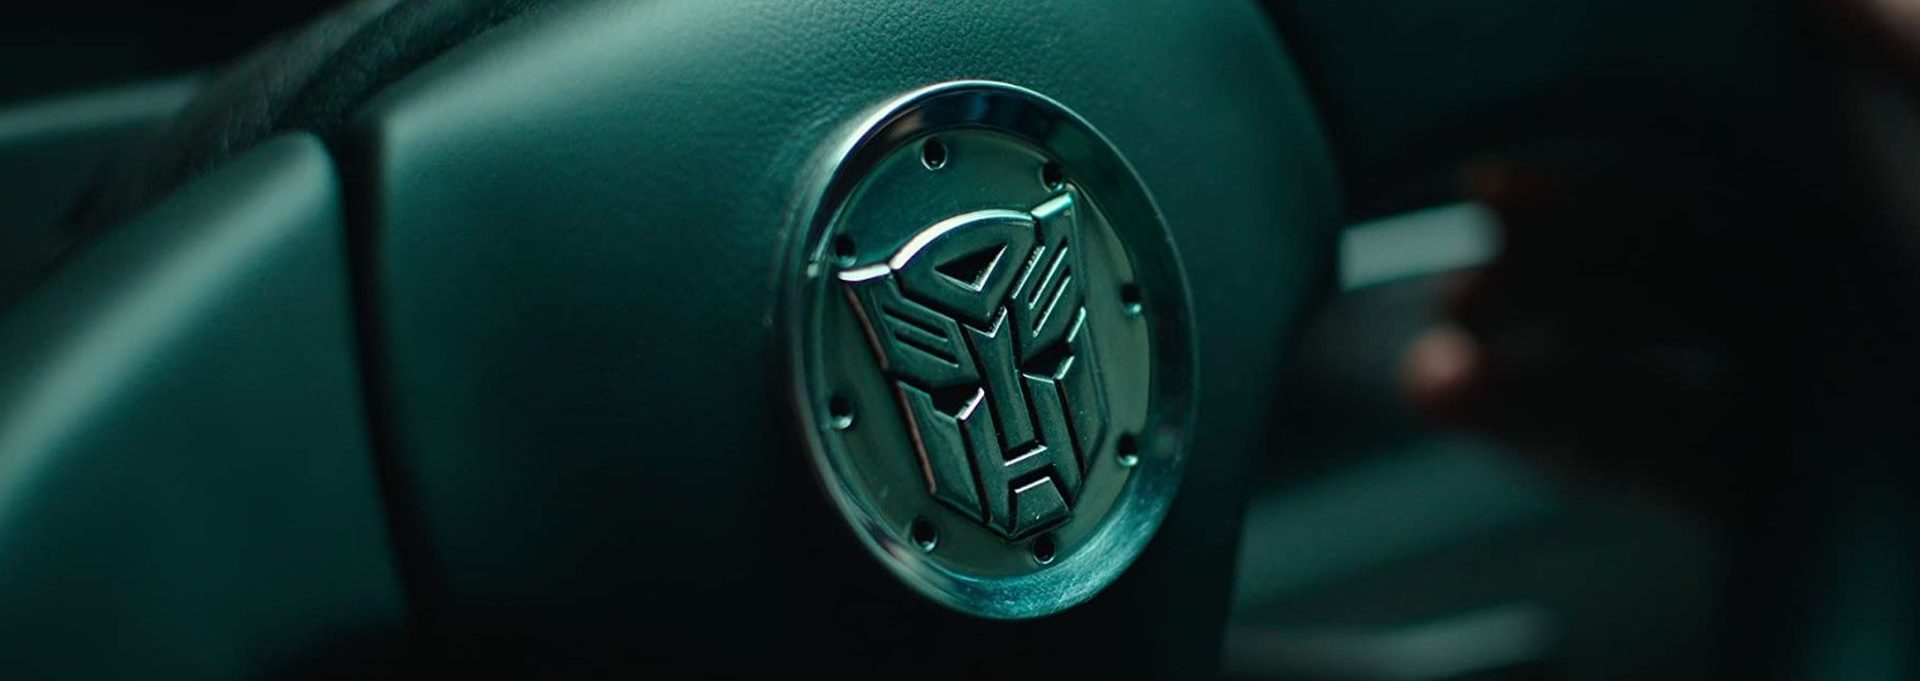 Transformers Prime Logo im Lenkrad